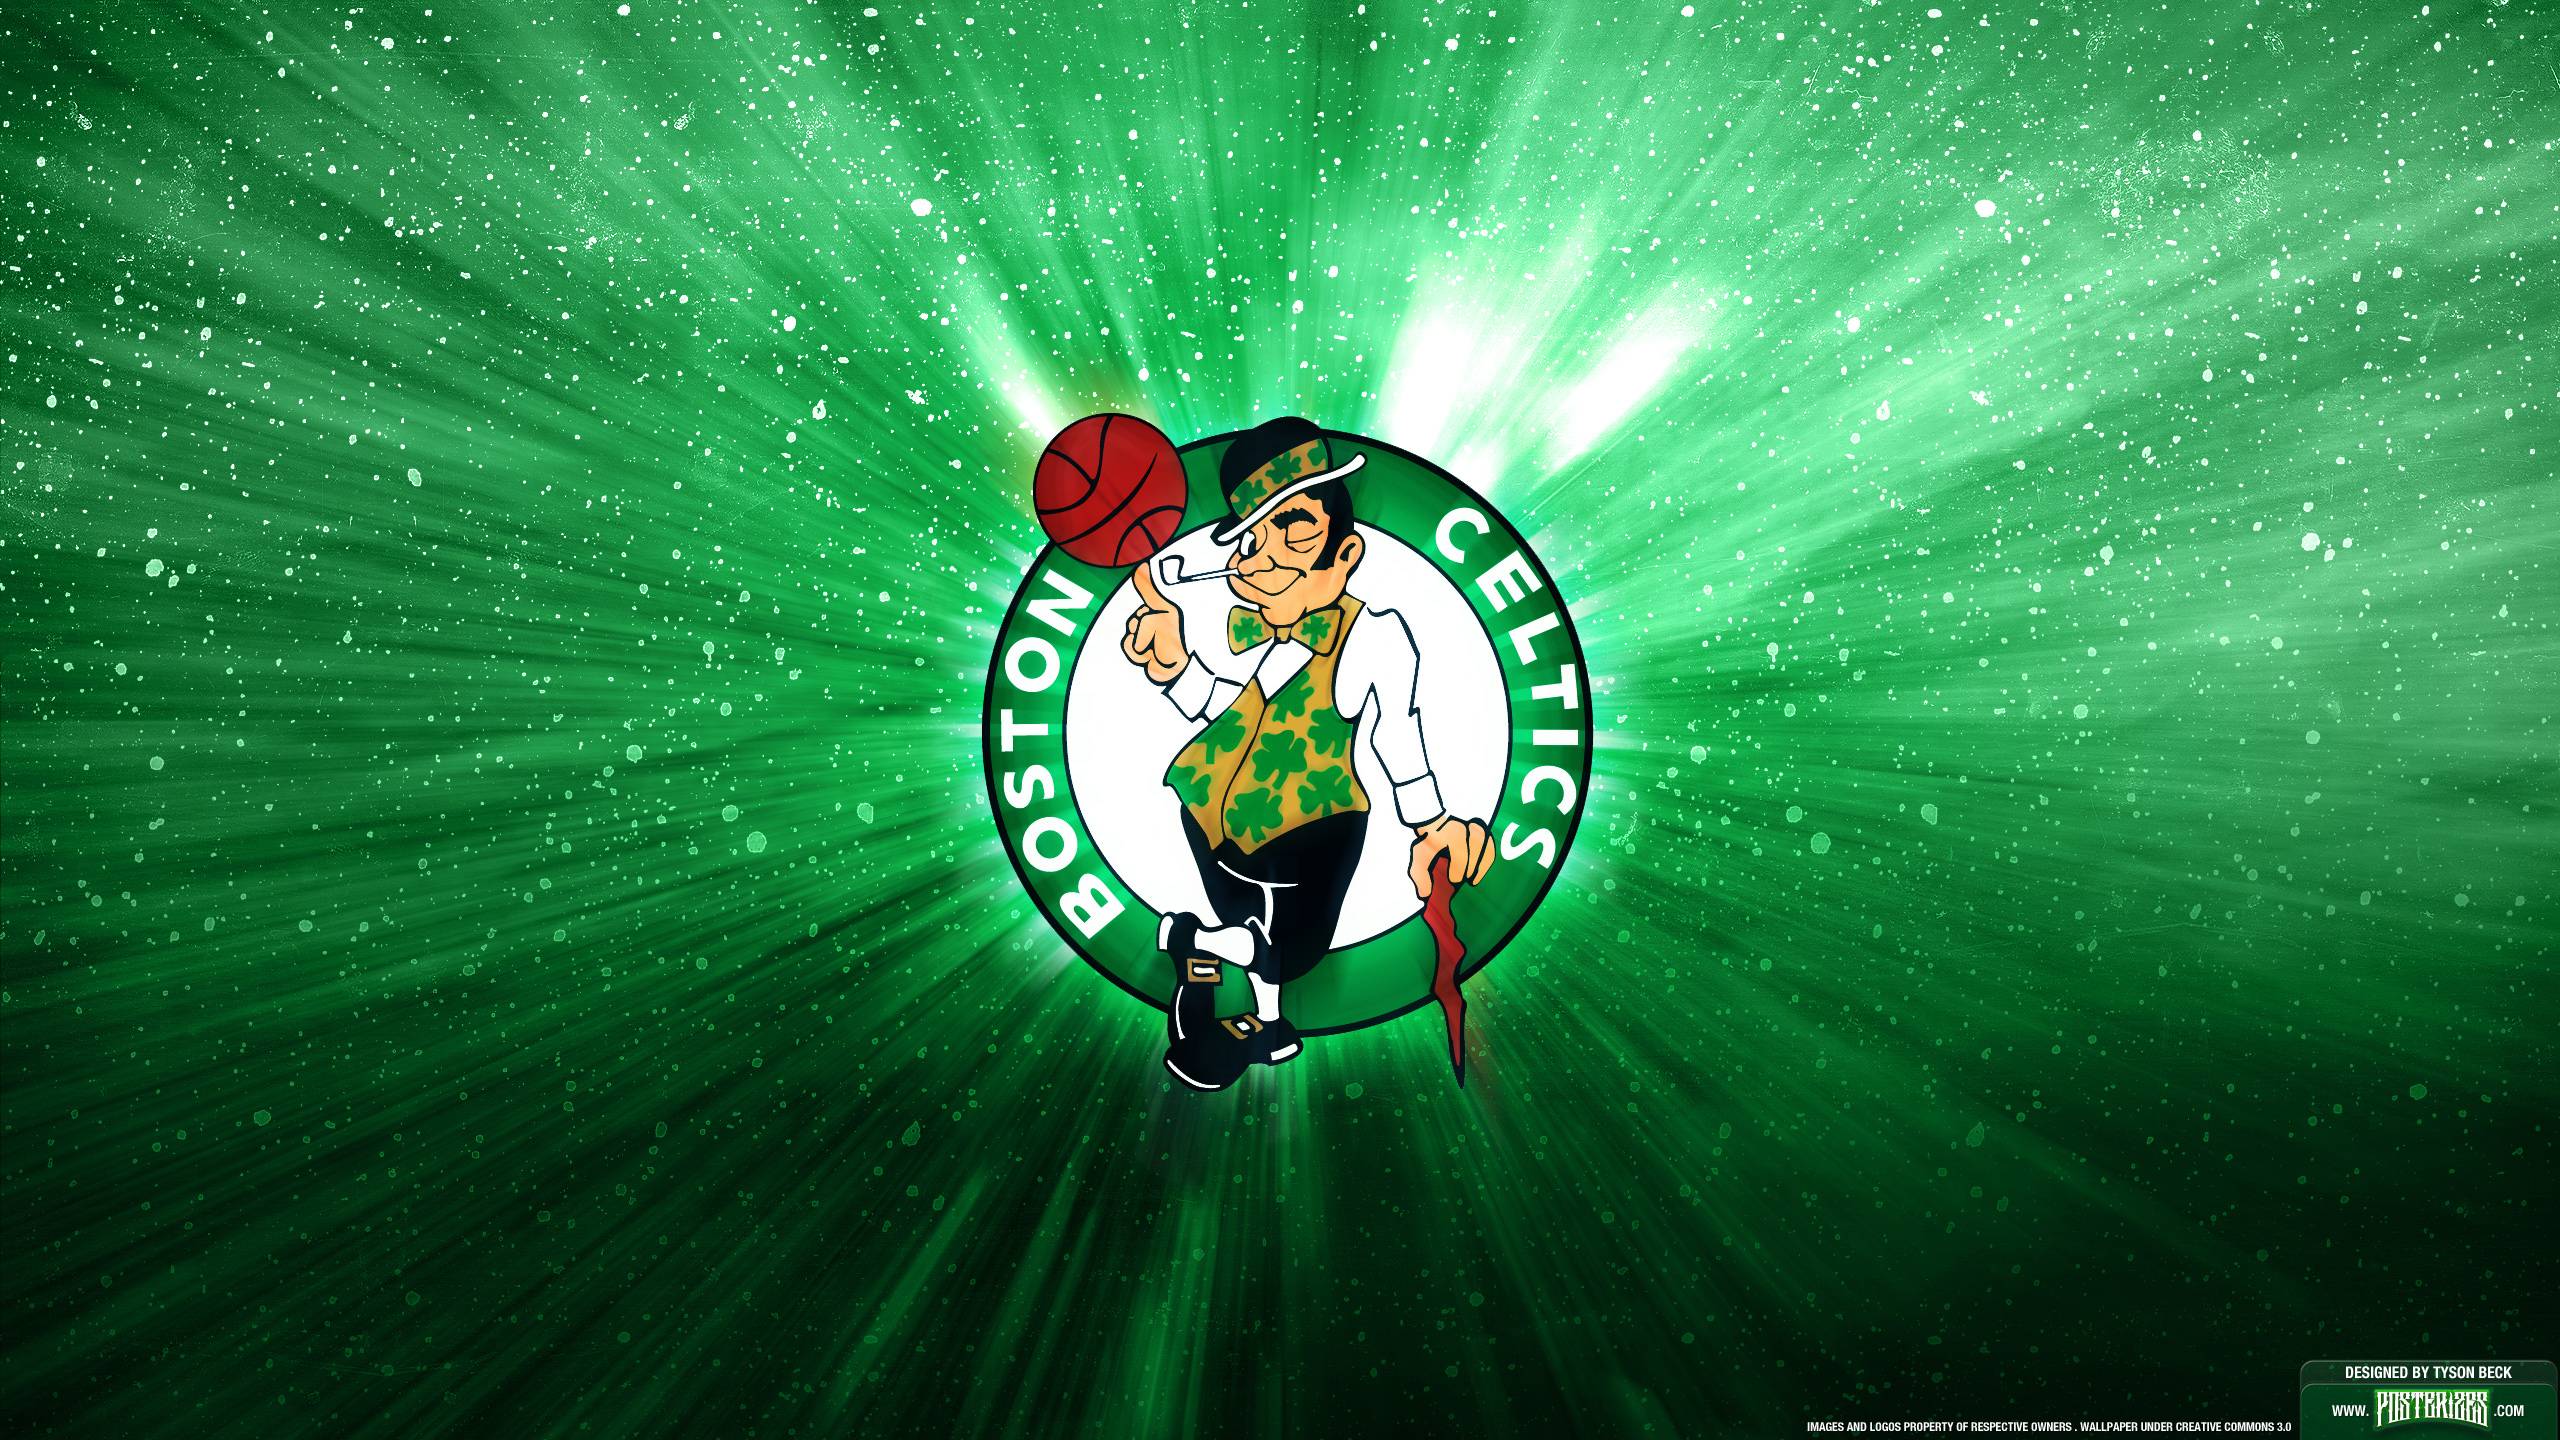 Boston Celtics. Posterizes. NBA Wallpaper & Basketball Designs